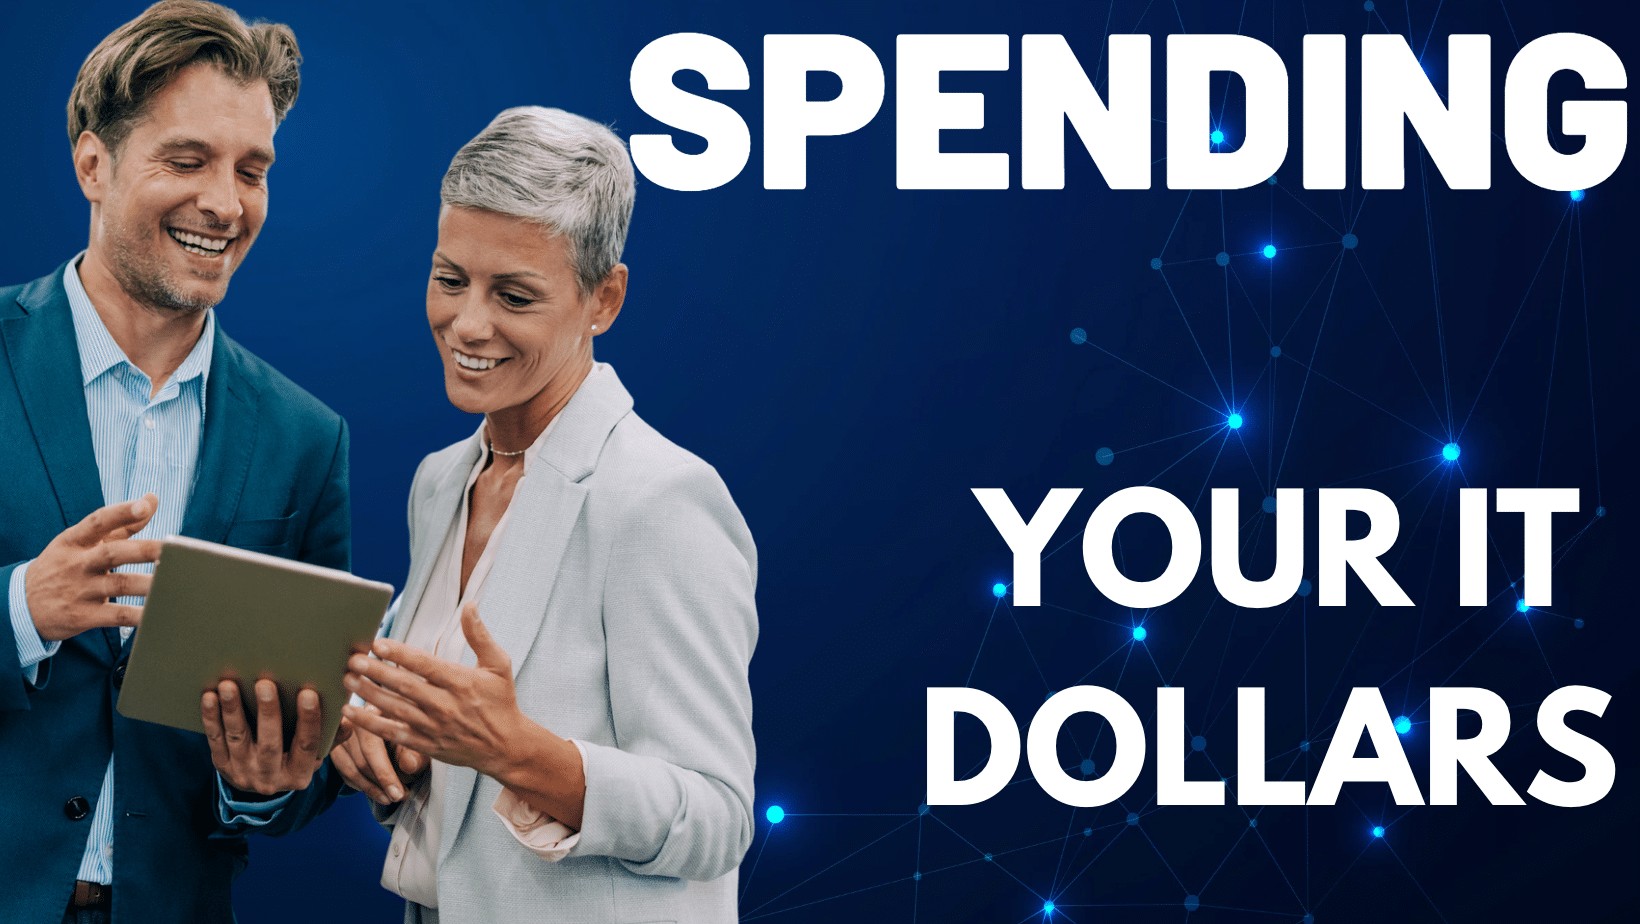 Spending Your IT Dollars